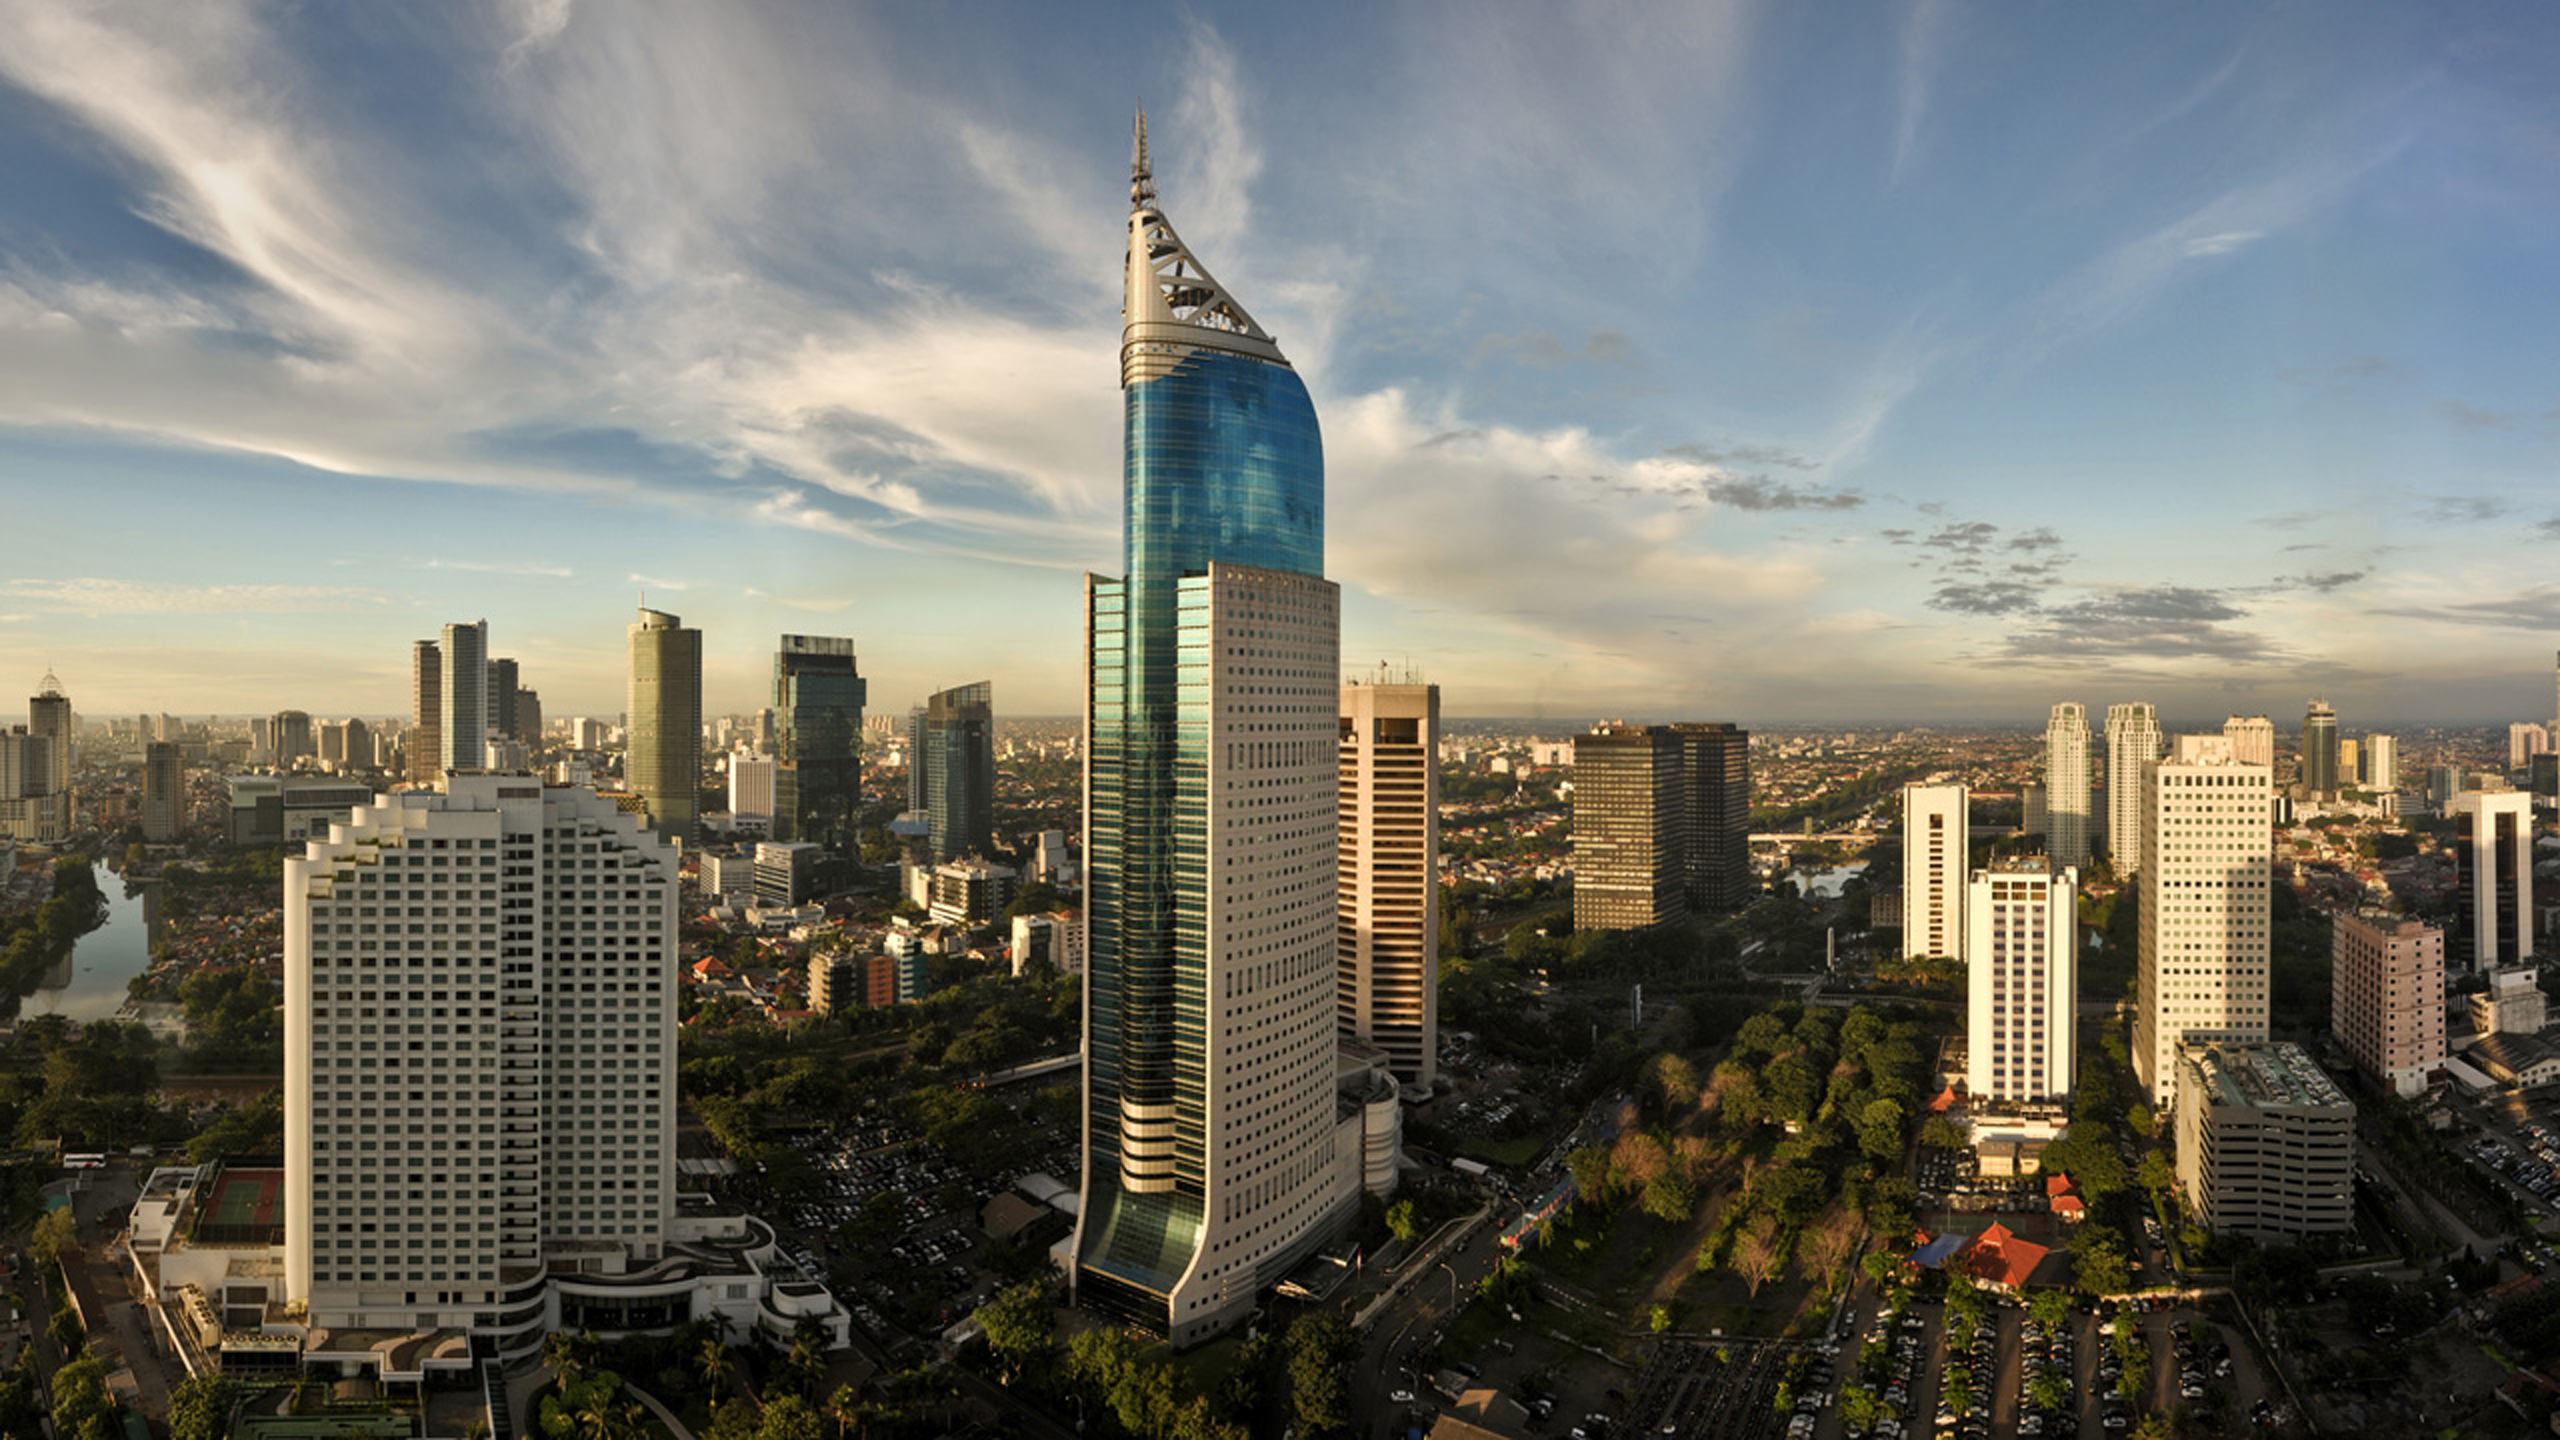 Jakarta Indonesia Skyline Wallpaper Hd : Wallpapers13.com